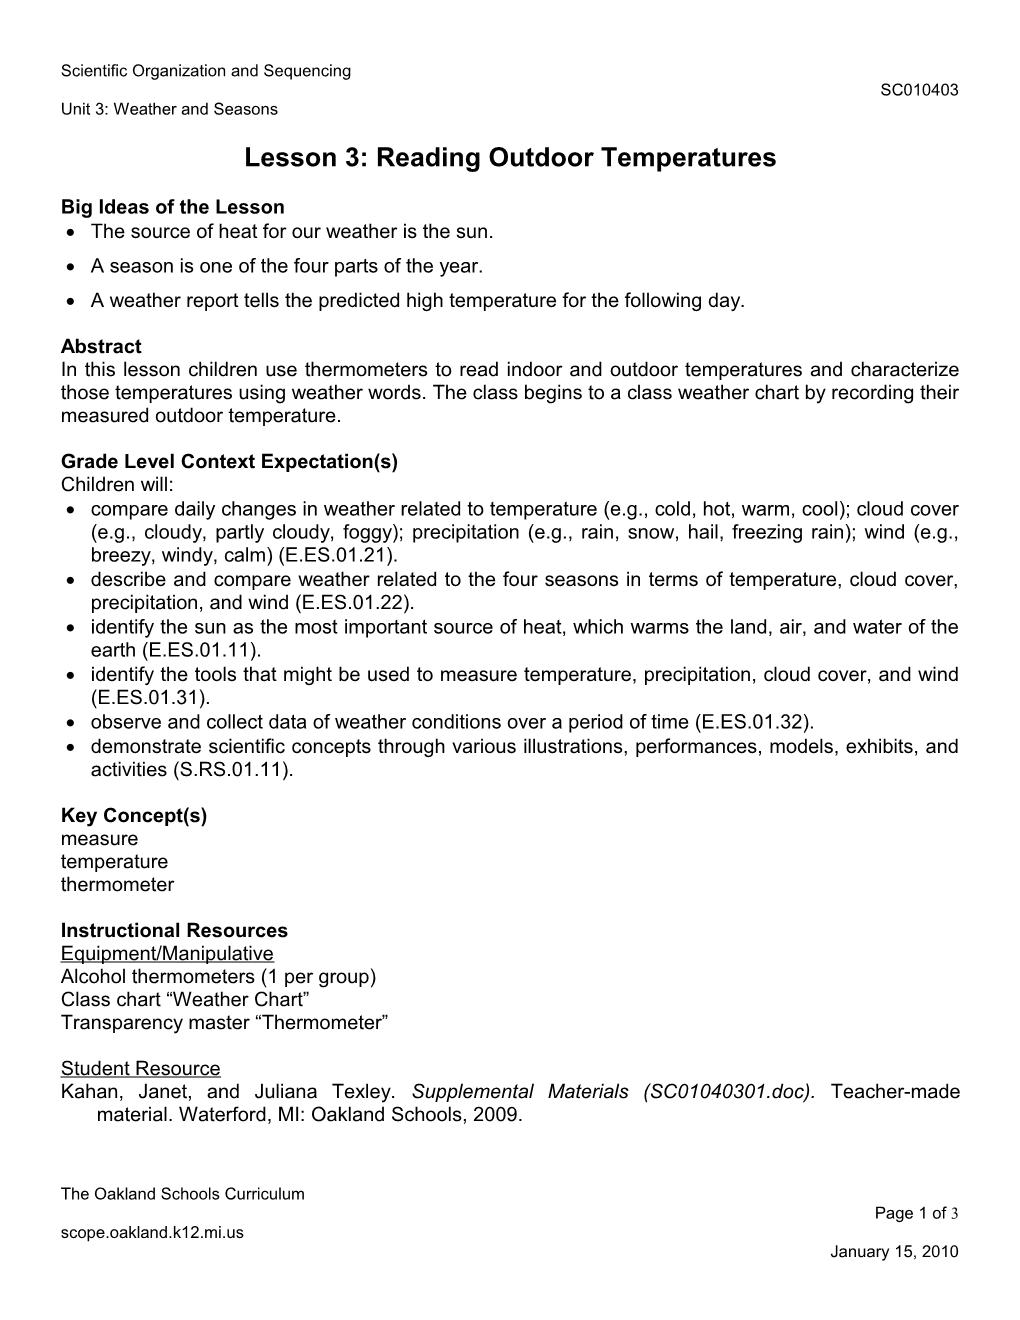 Lesson 3: Reading Outdoor Temperatures